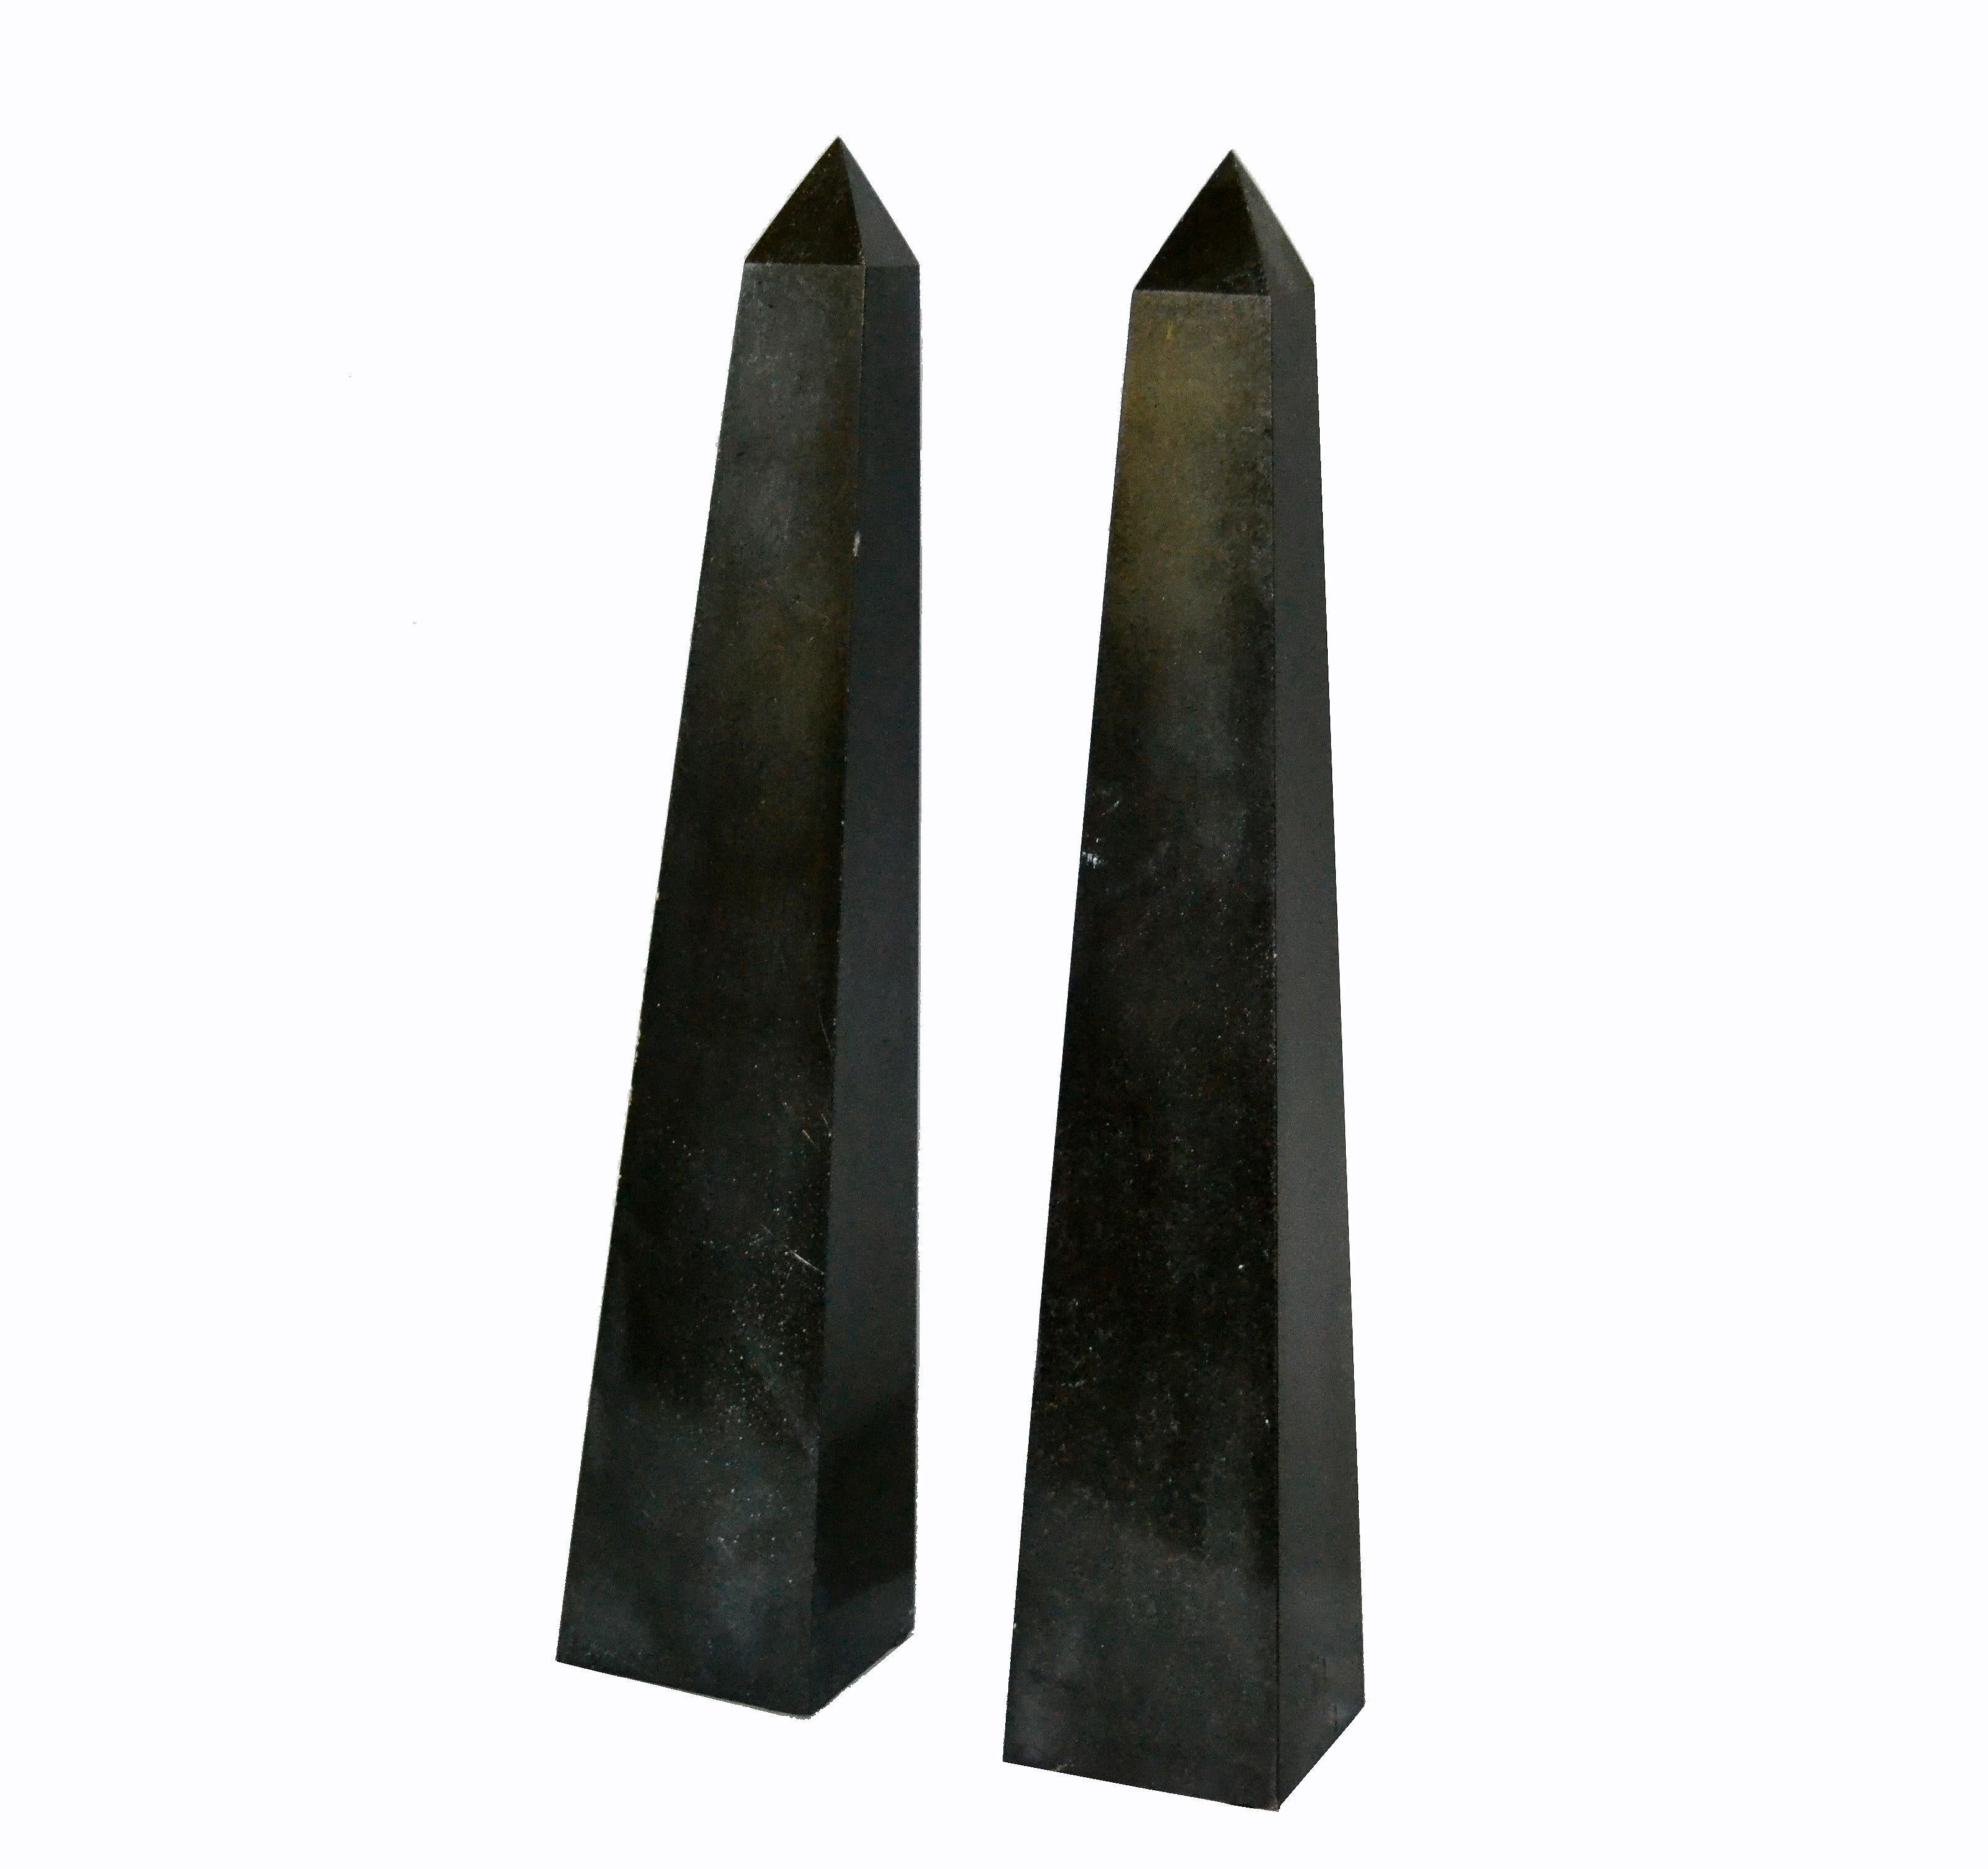 Polished Pair of Mid-Century Modern Black Marble Obelisks